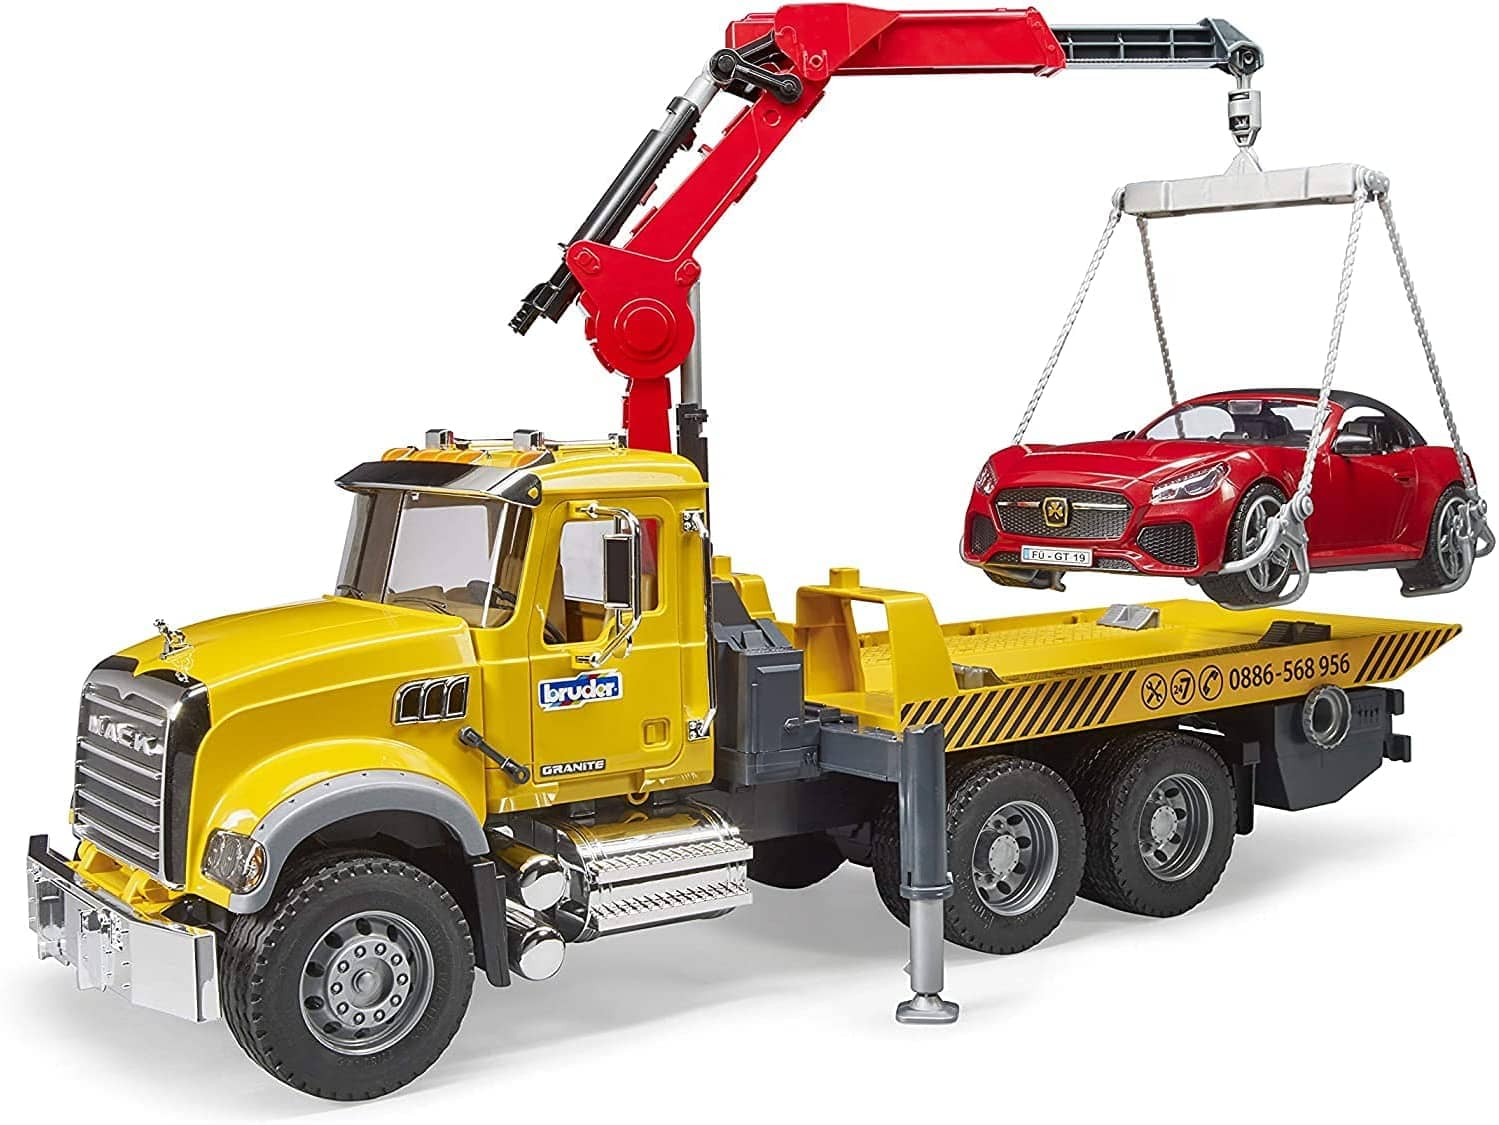 Bruder® 02829 MACK Granite Tow Truck with Bruder Roadster